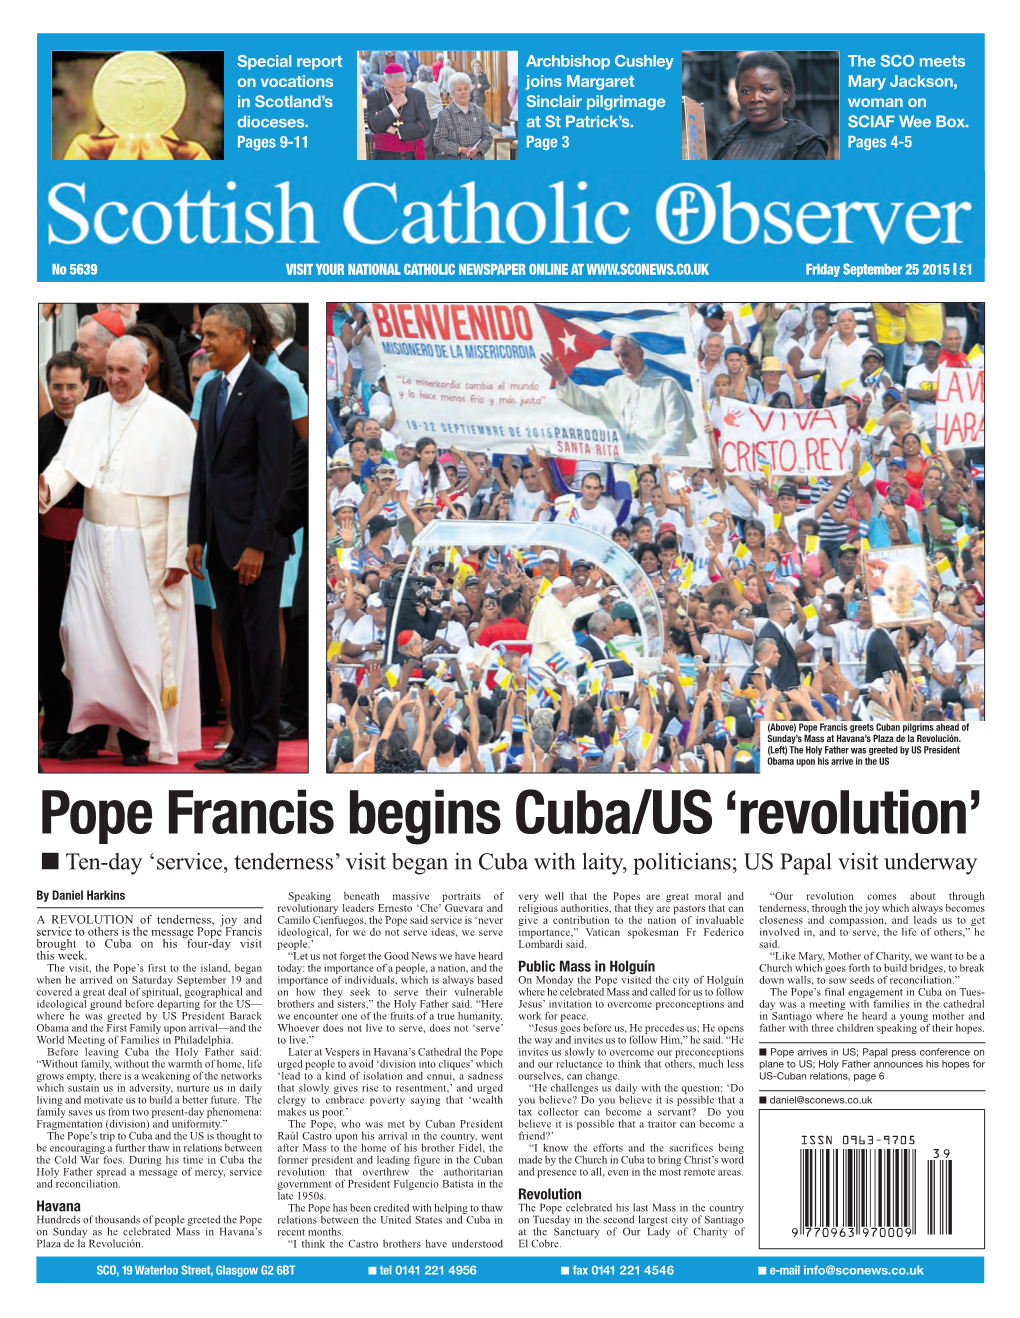 Pope Francis Begins Cuba/US